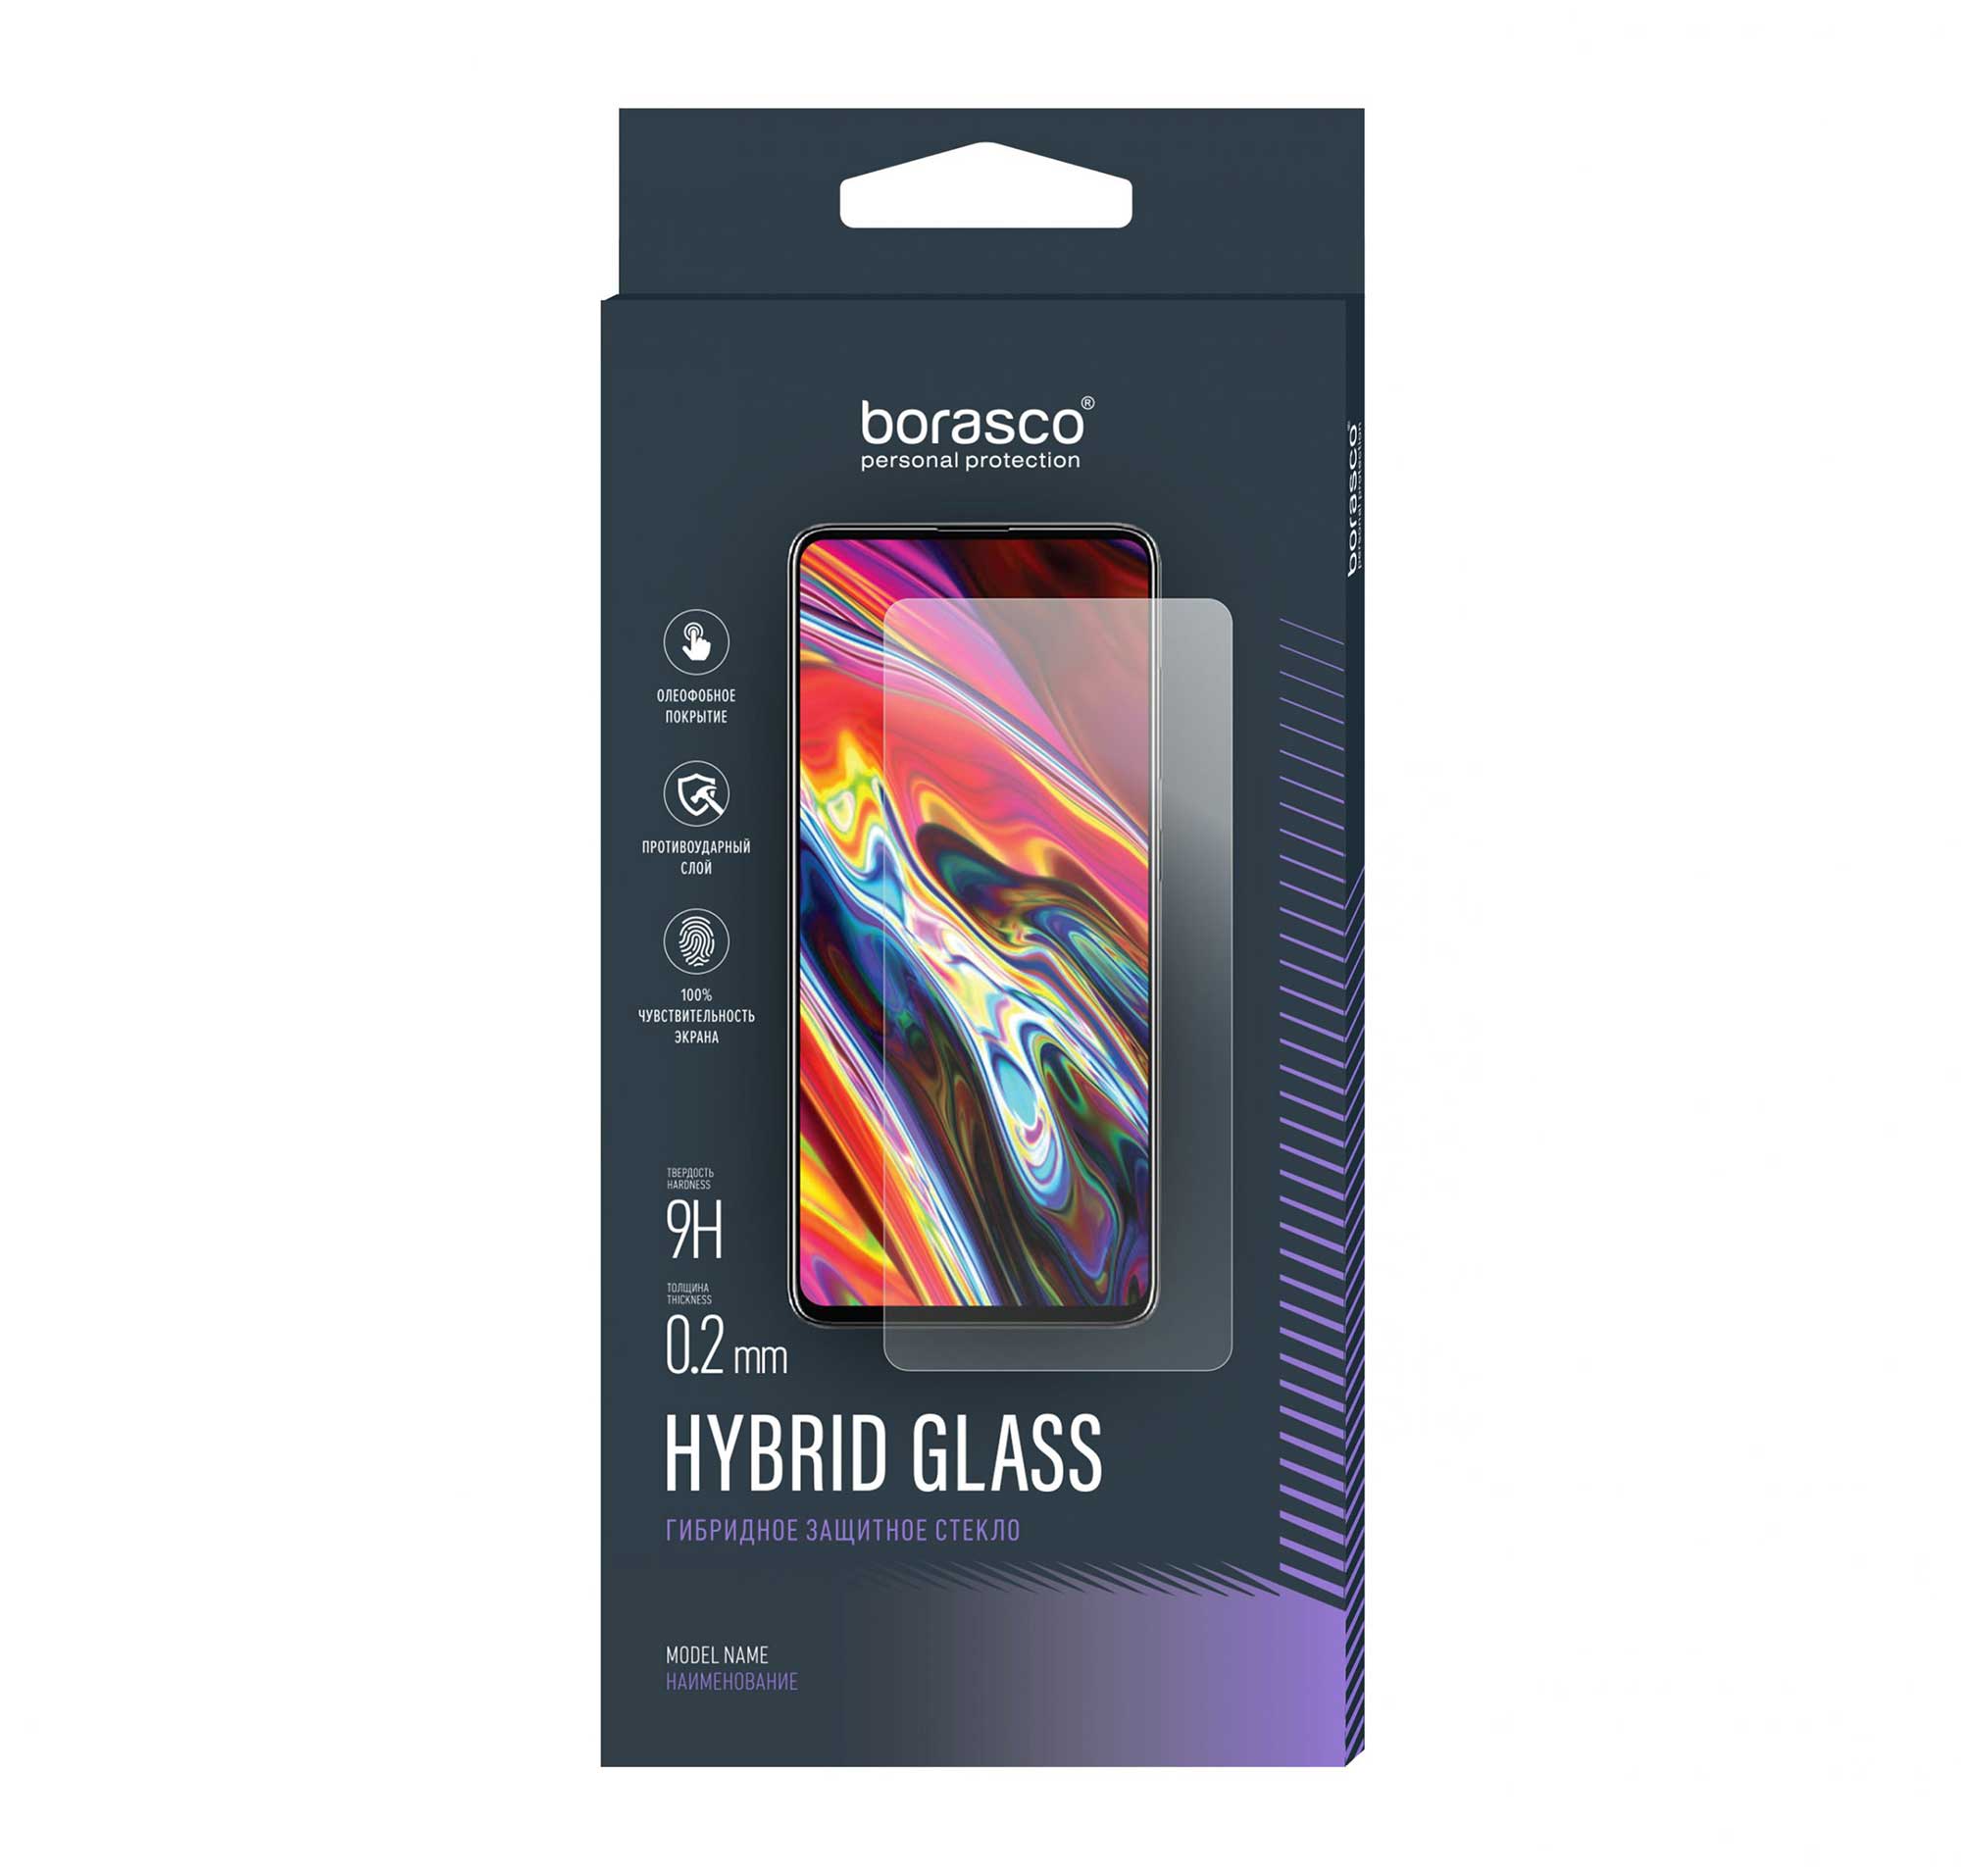 Защитное стекло Hybrid Glass для Itel A25 чехол mypads ясно влади для itel a25 itel a25 pro itel a35 задняя панель накладка бампер